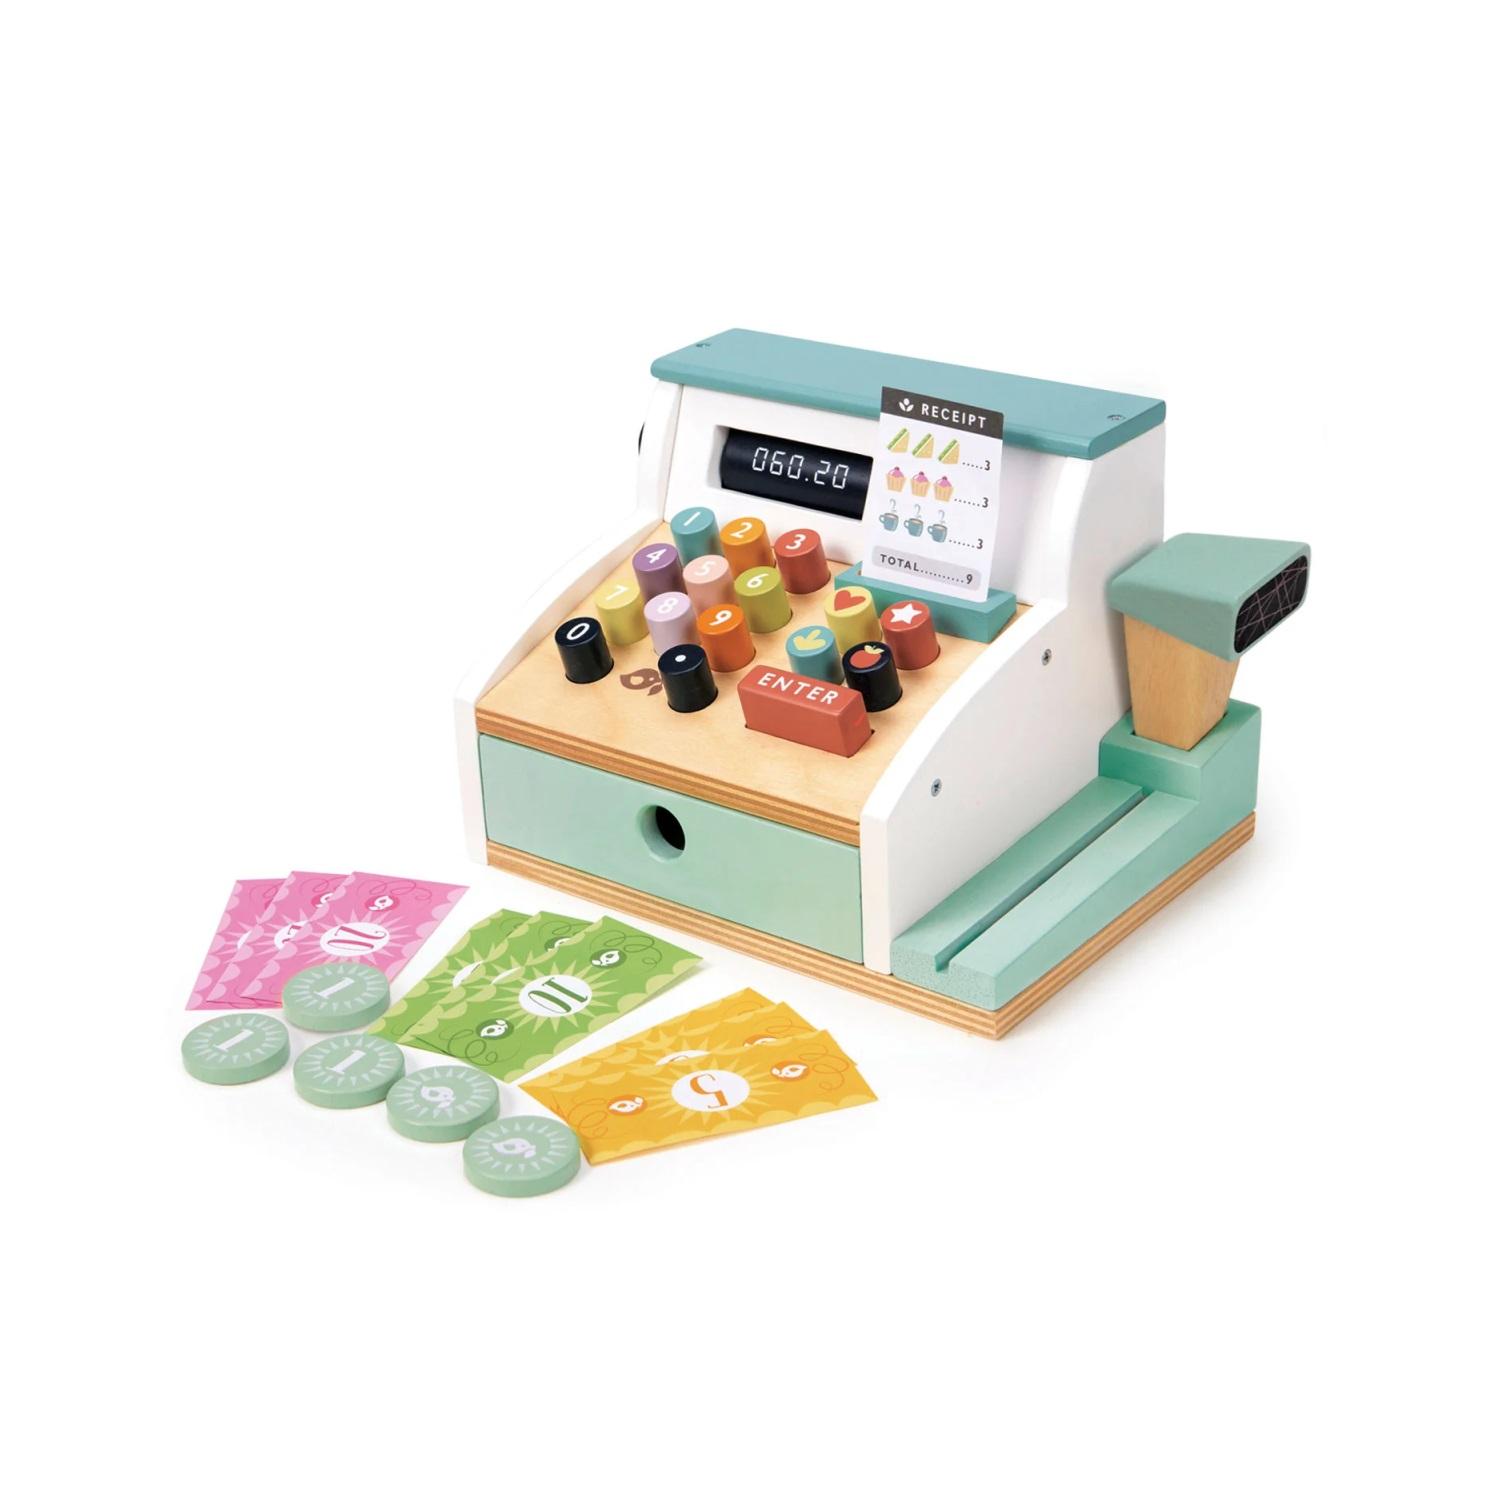 Montessori tender leaf cashier toys